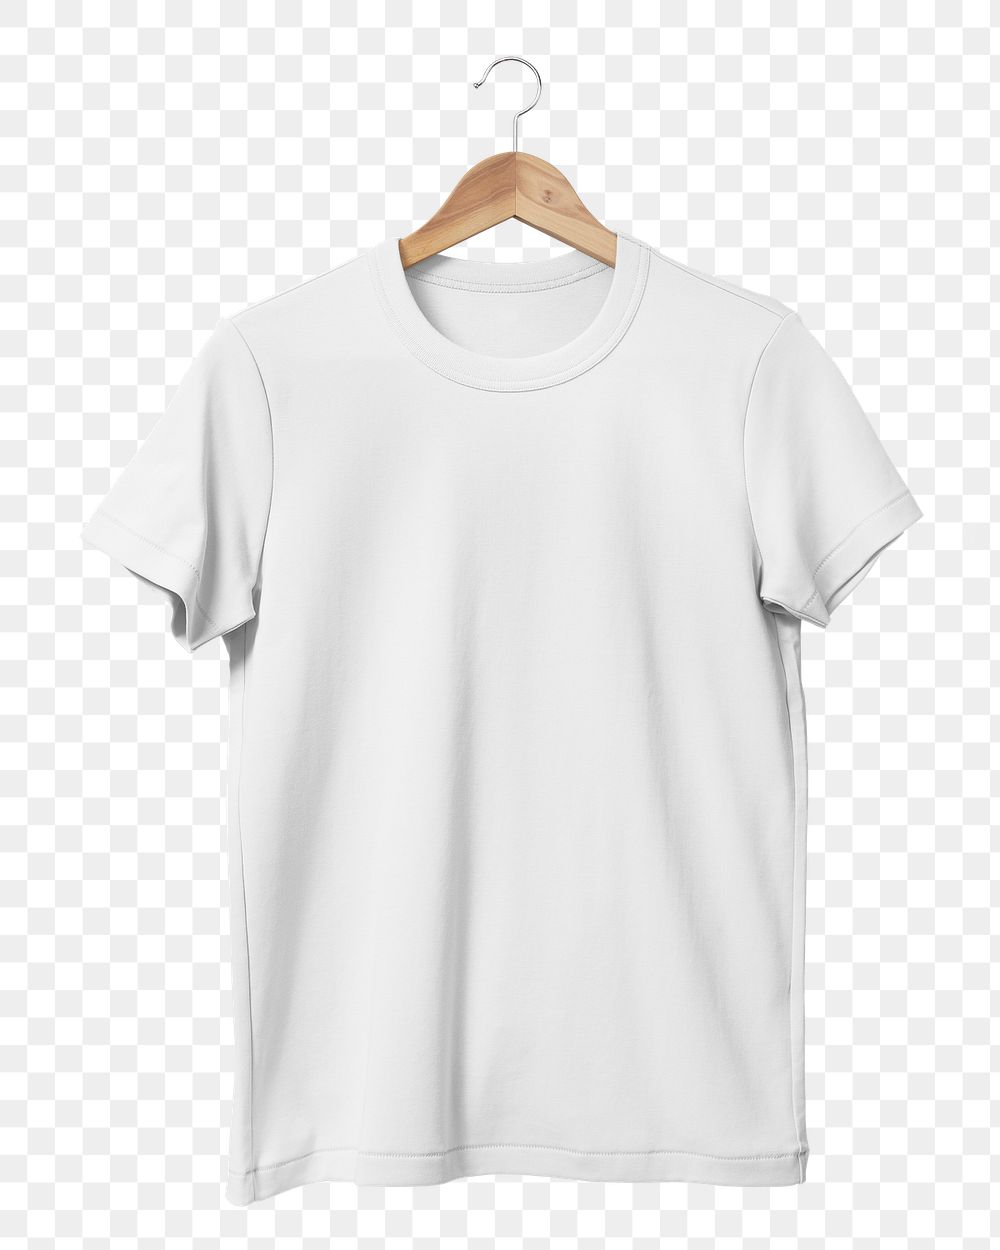 T-shirt png, white simple fashion, transparent design on transparent background